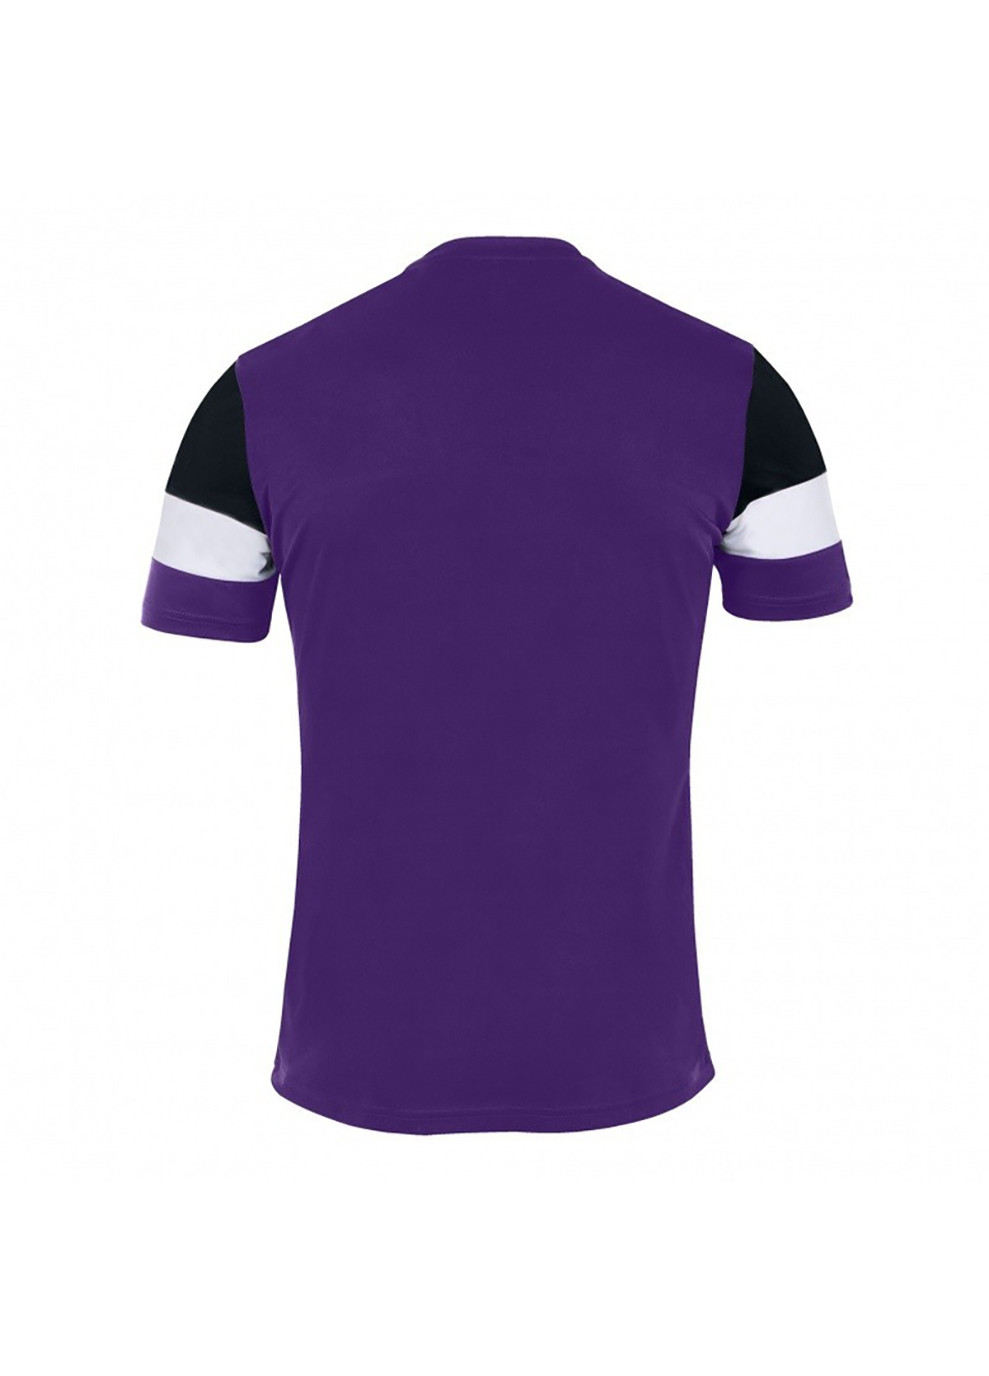 Фиолетовая футболка crew iv t-shirt purple-black s/s фиолетовый Joma